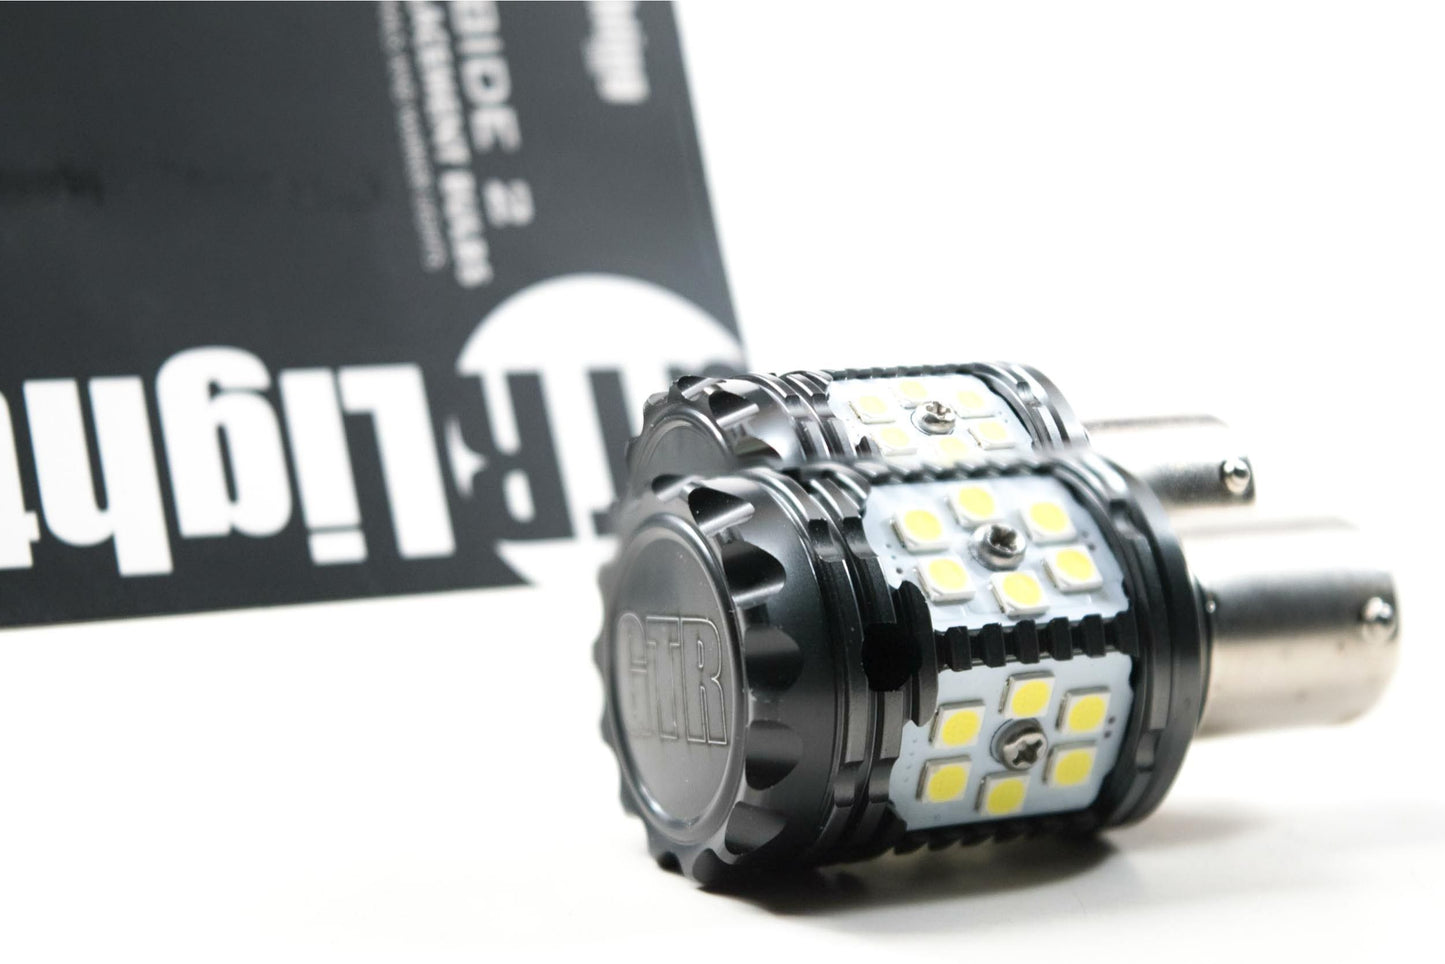 1157: GTR Carbide Canbus 2.0 Resistor Free LED Bulbs